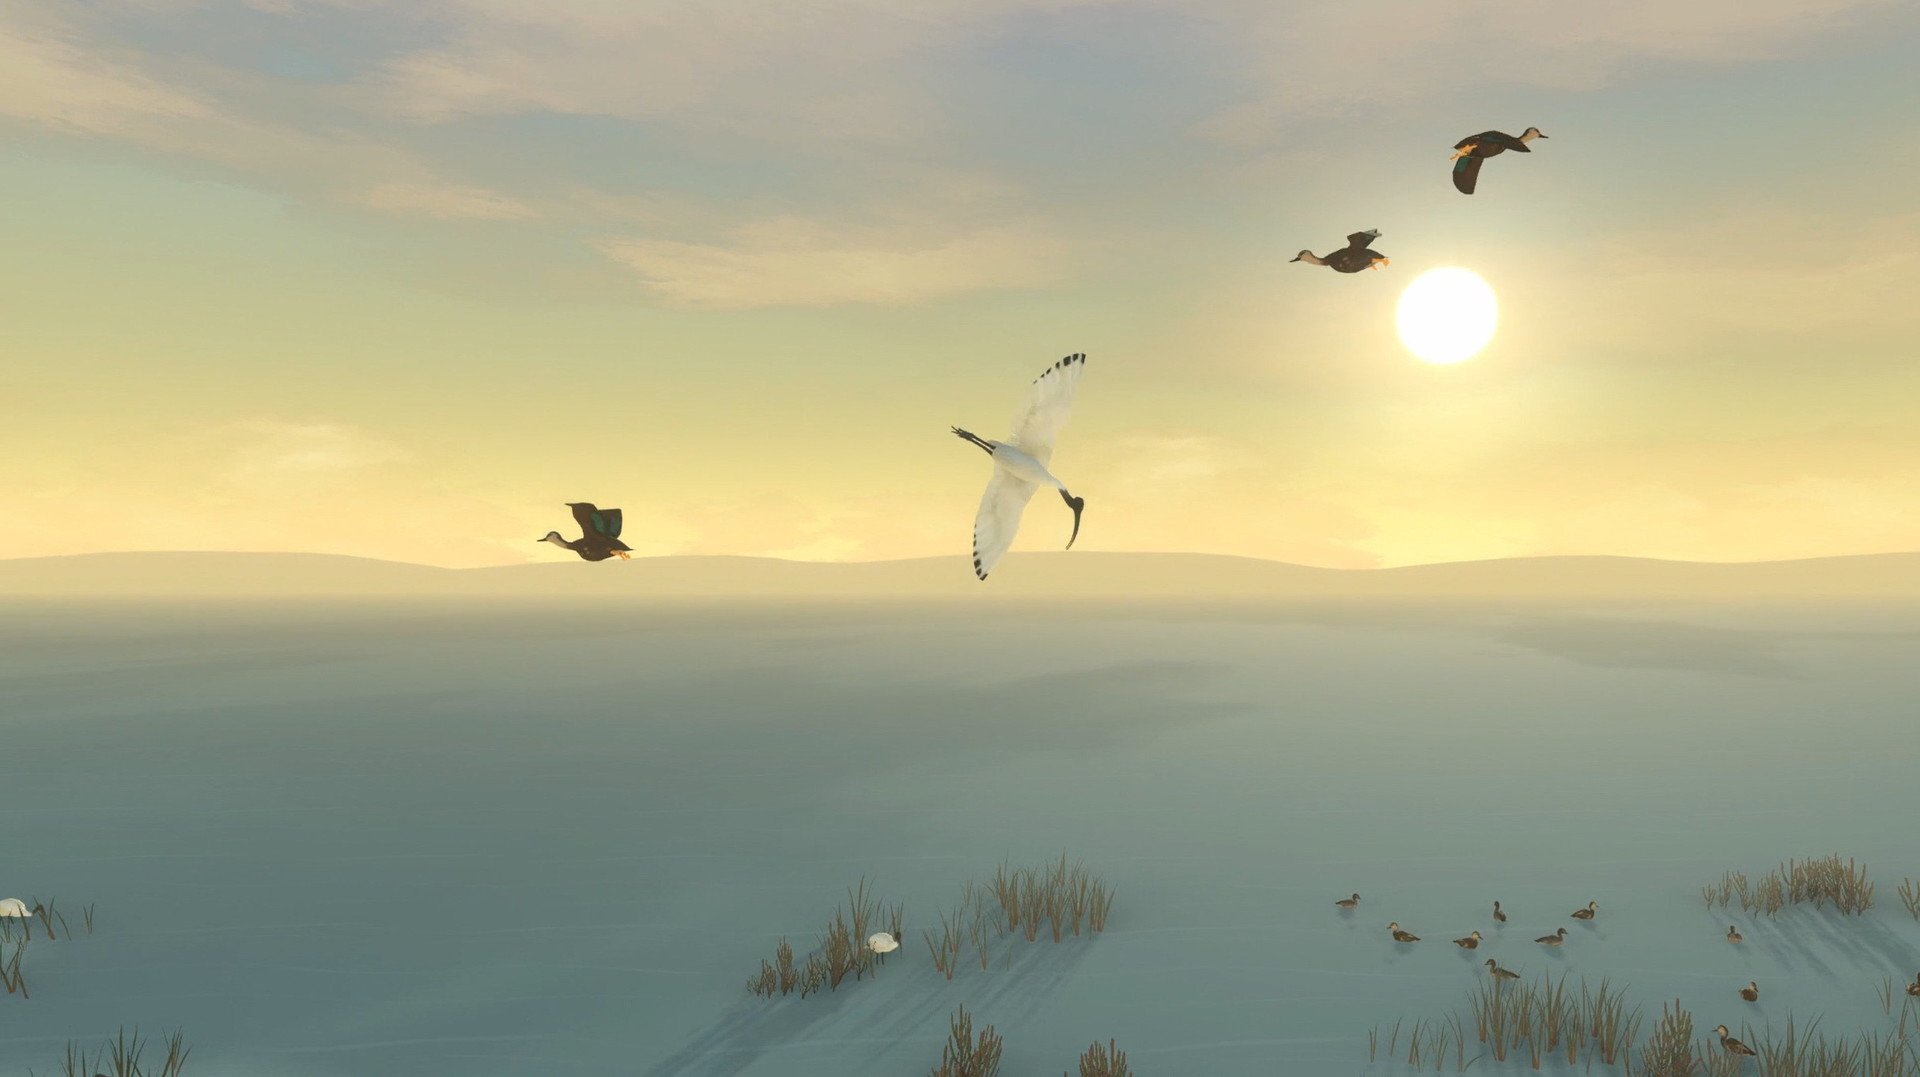 Storm Boy: The Game - screenshot 12